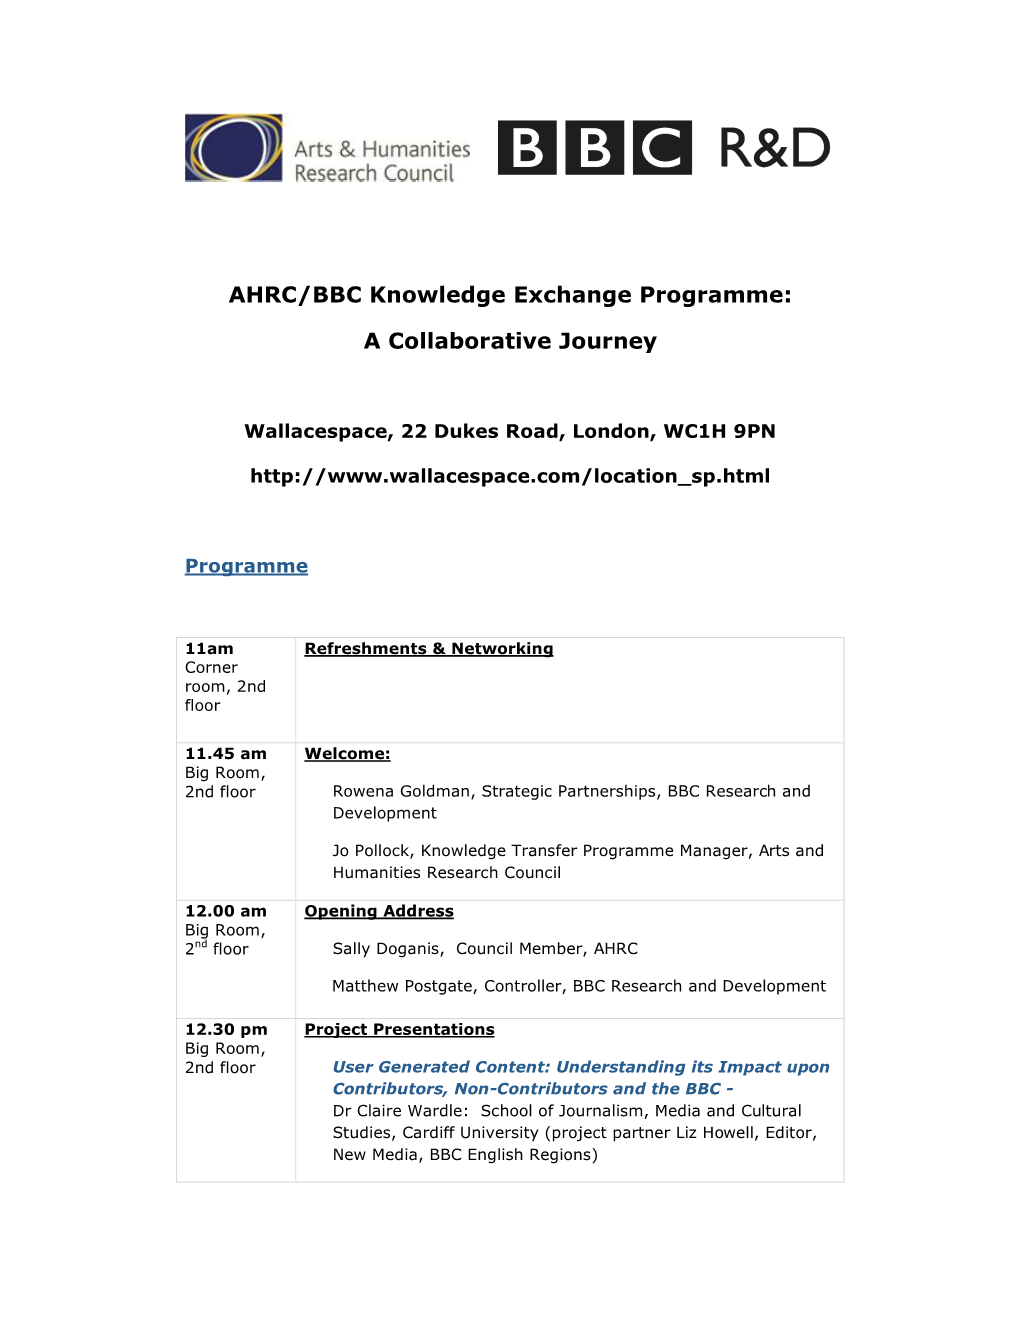 AHRC/BBC Knowledge Exchange Programme: a Collaborative Journey